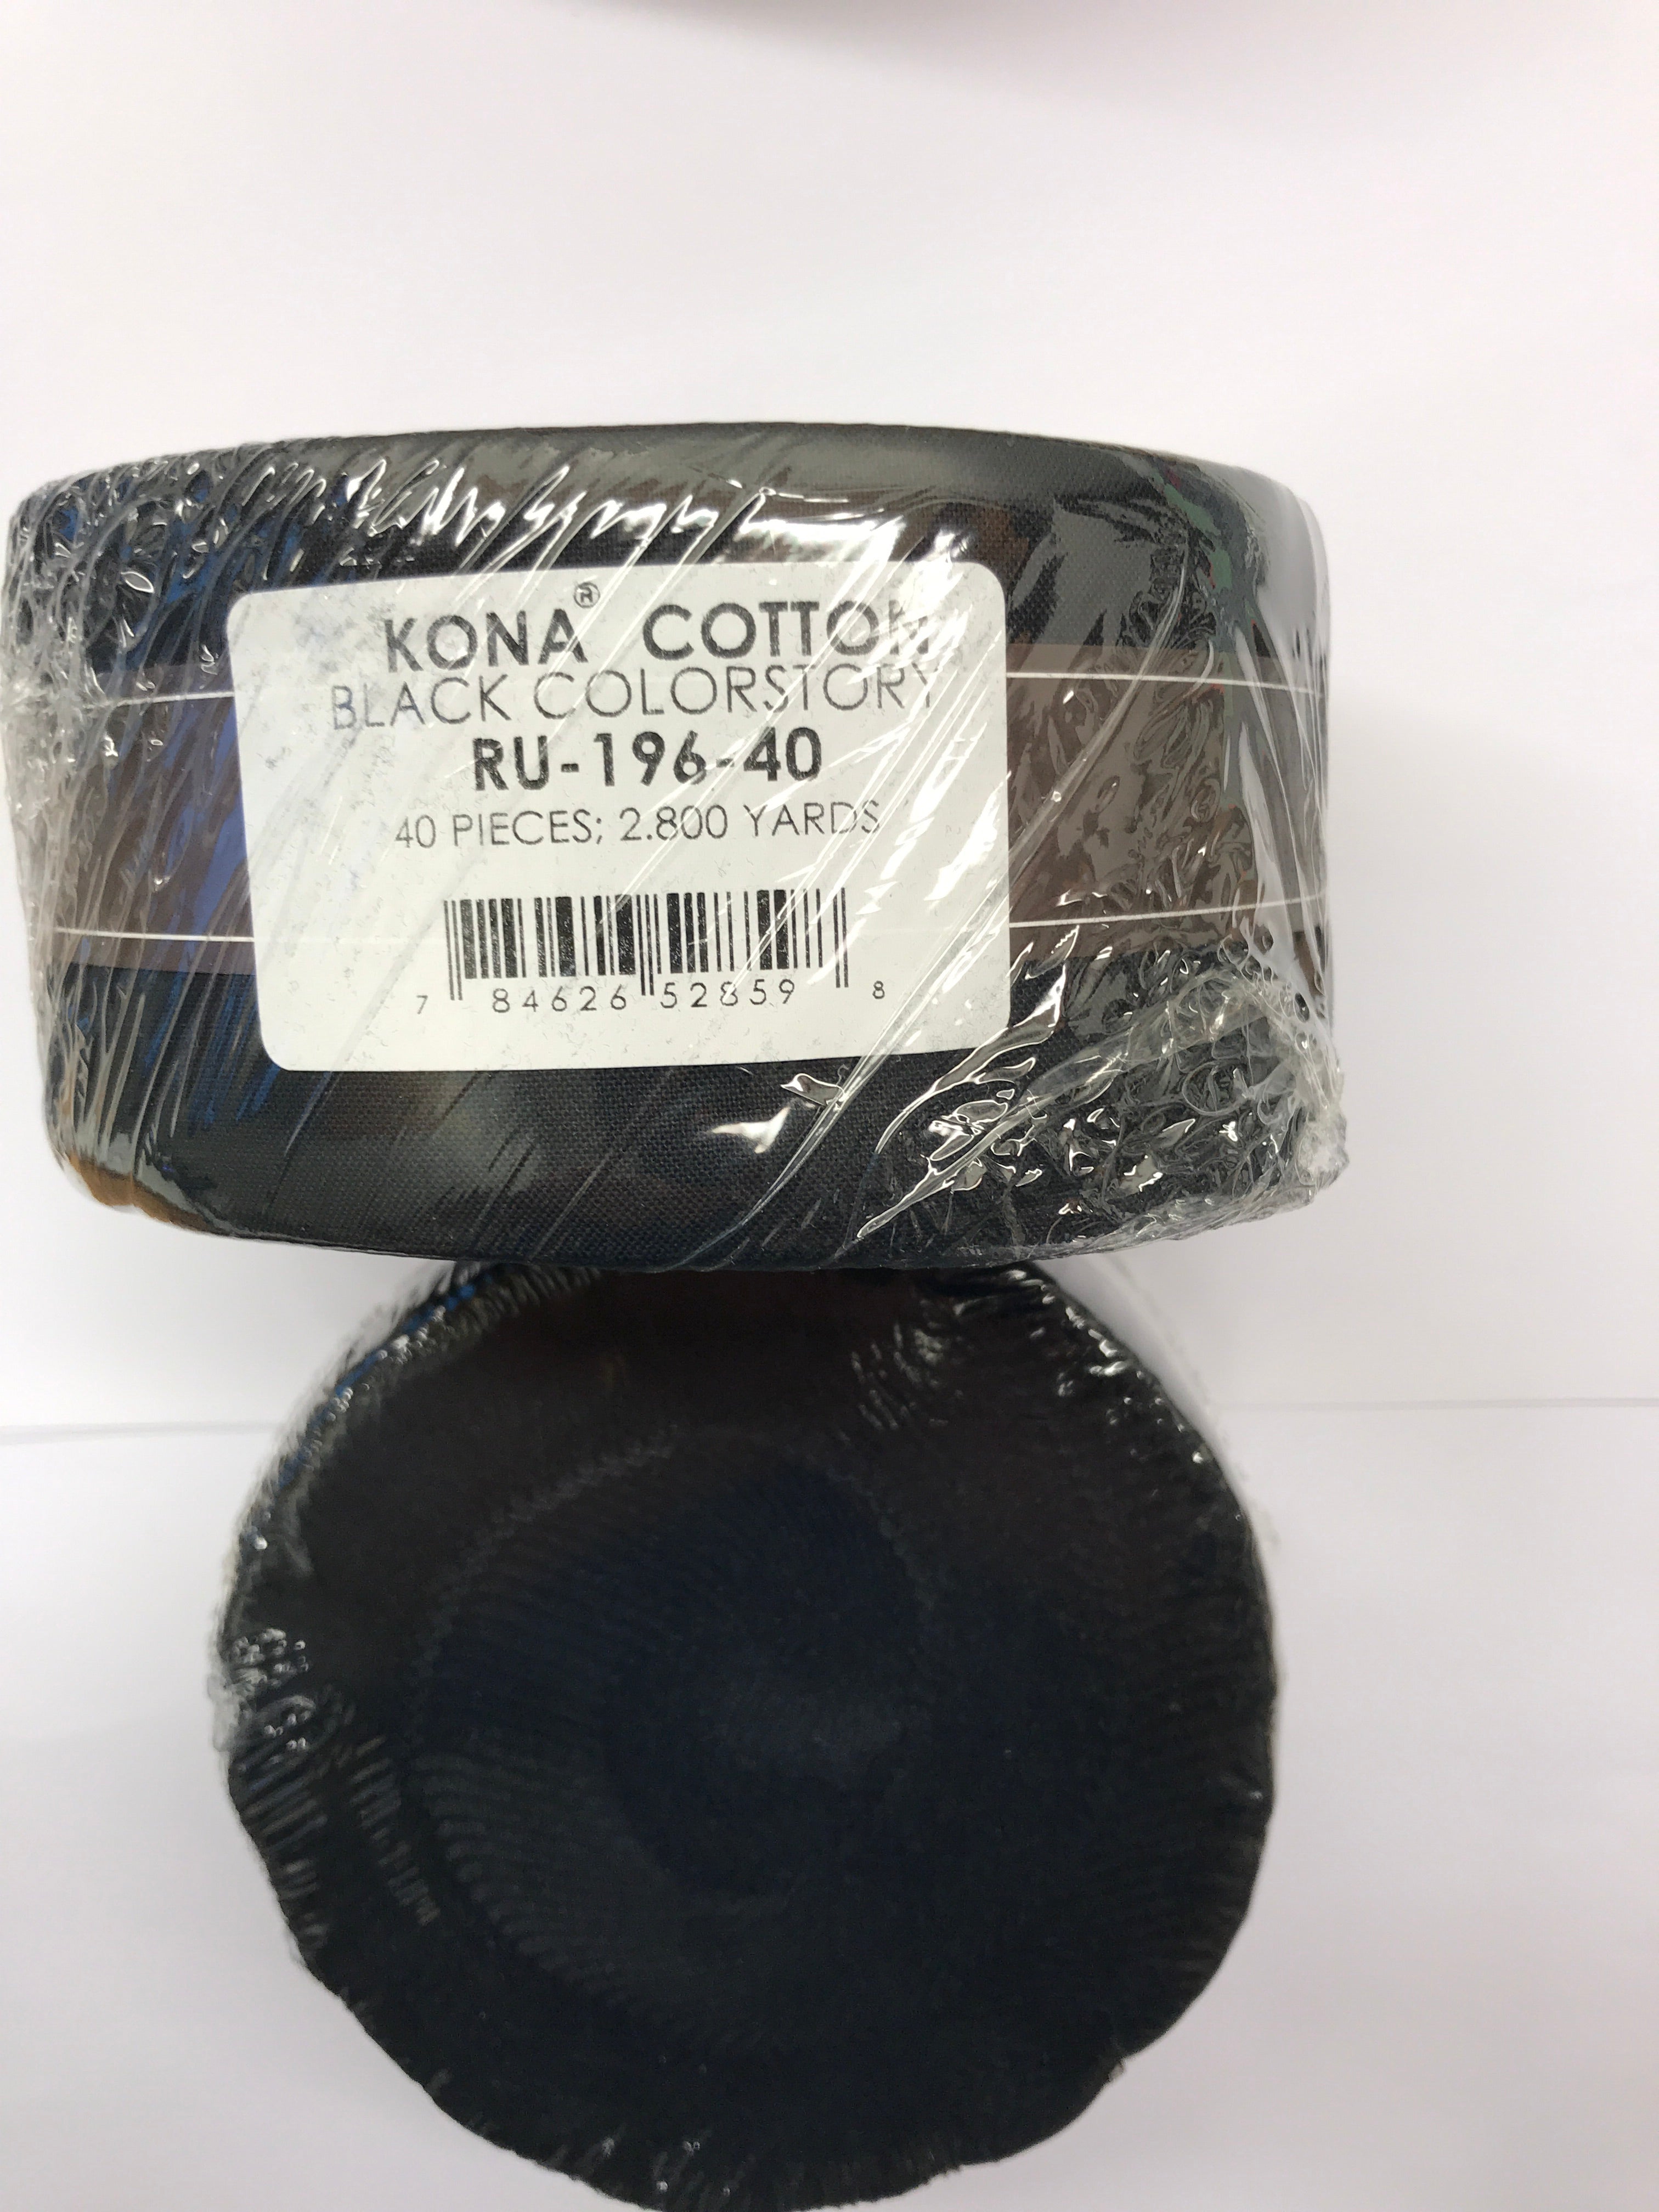 Kona Solid Black Colorstory Roll Ups - RU-196-40